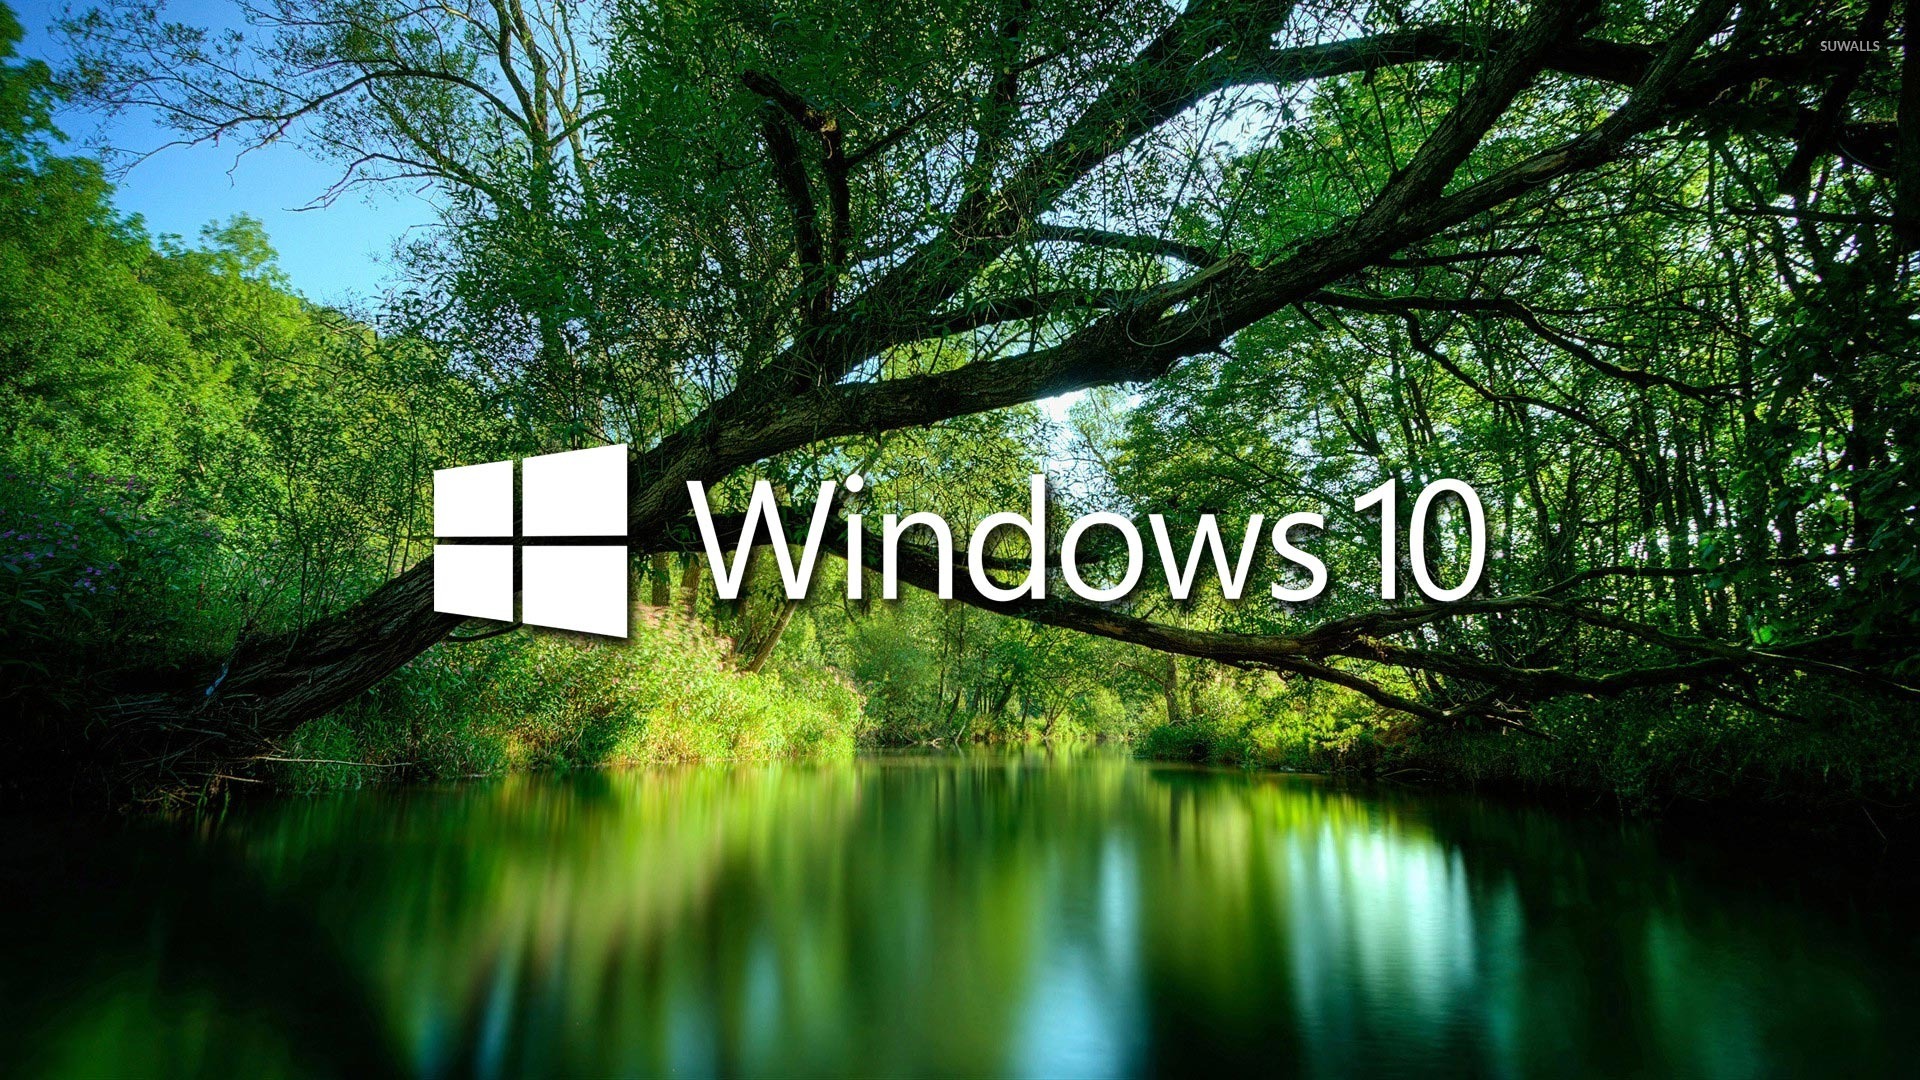 100+] Windows 10 Wallpapers | Wallpapers.com